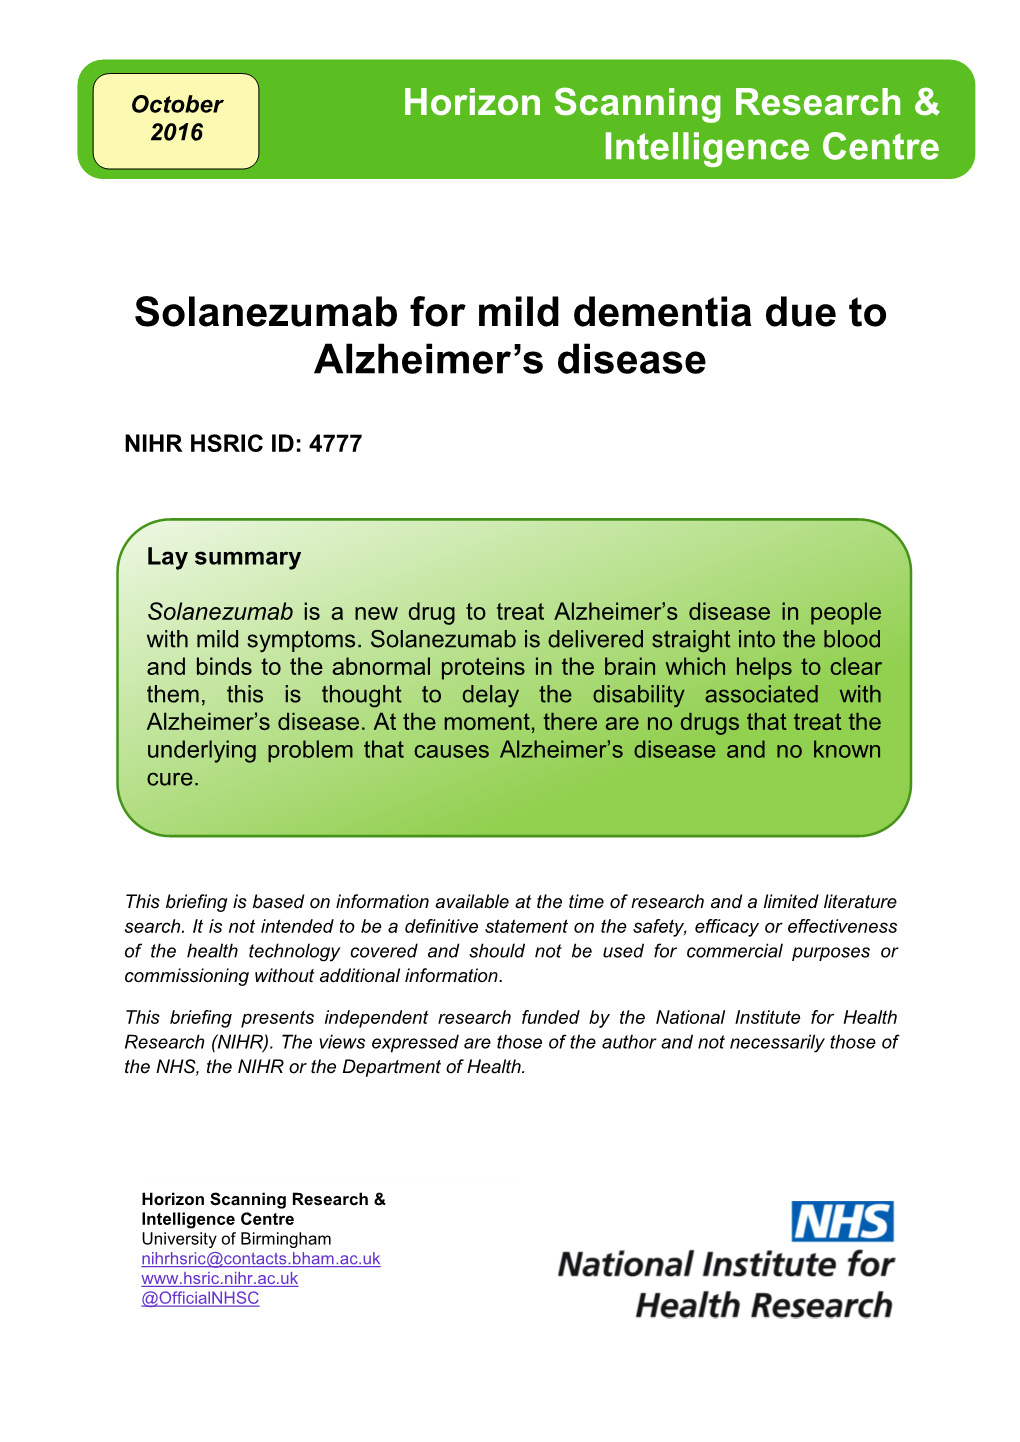 Solanezumab for Mild Dementia Due to Alzheimer's Disease